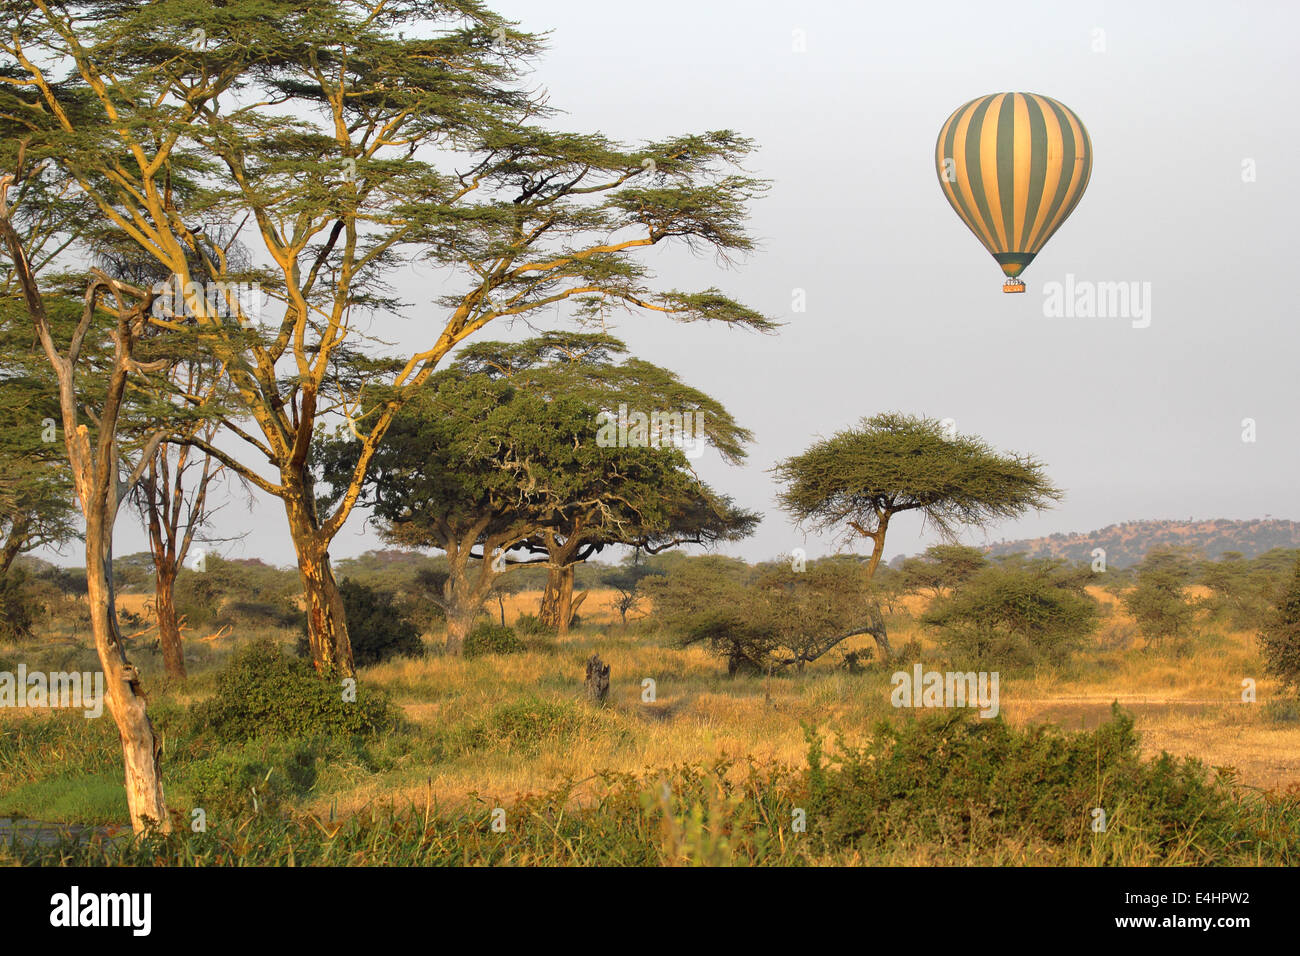 Green and yellow balloon flying over the savannah of Serengeti National Park, Tanzania Stock Photo